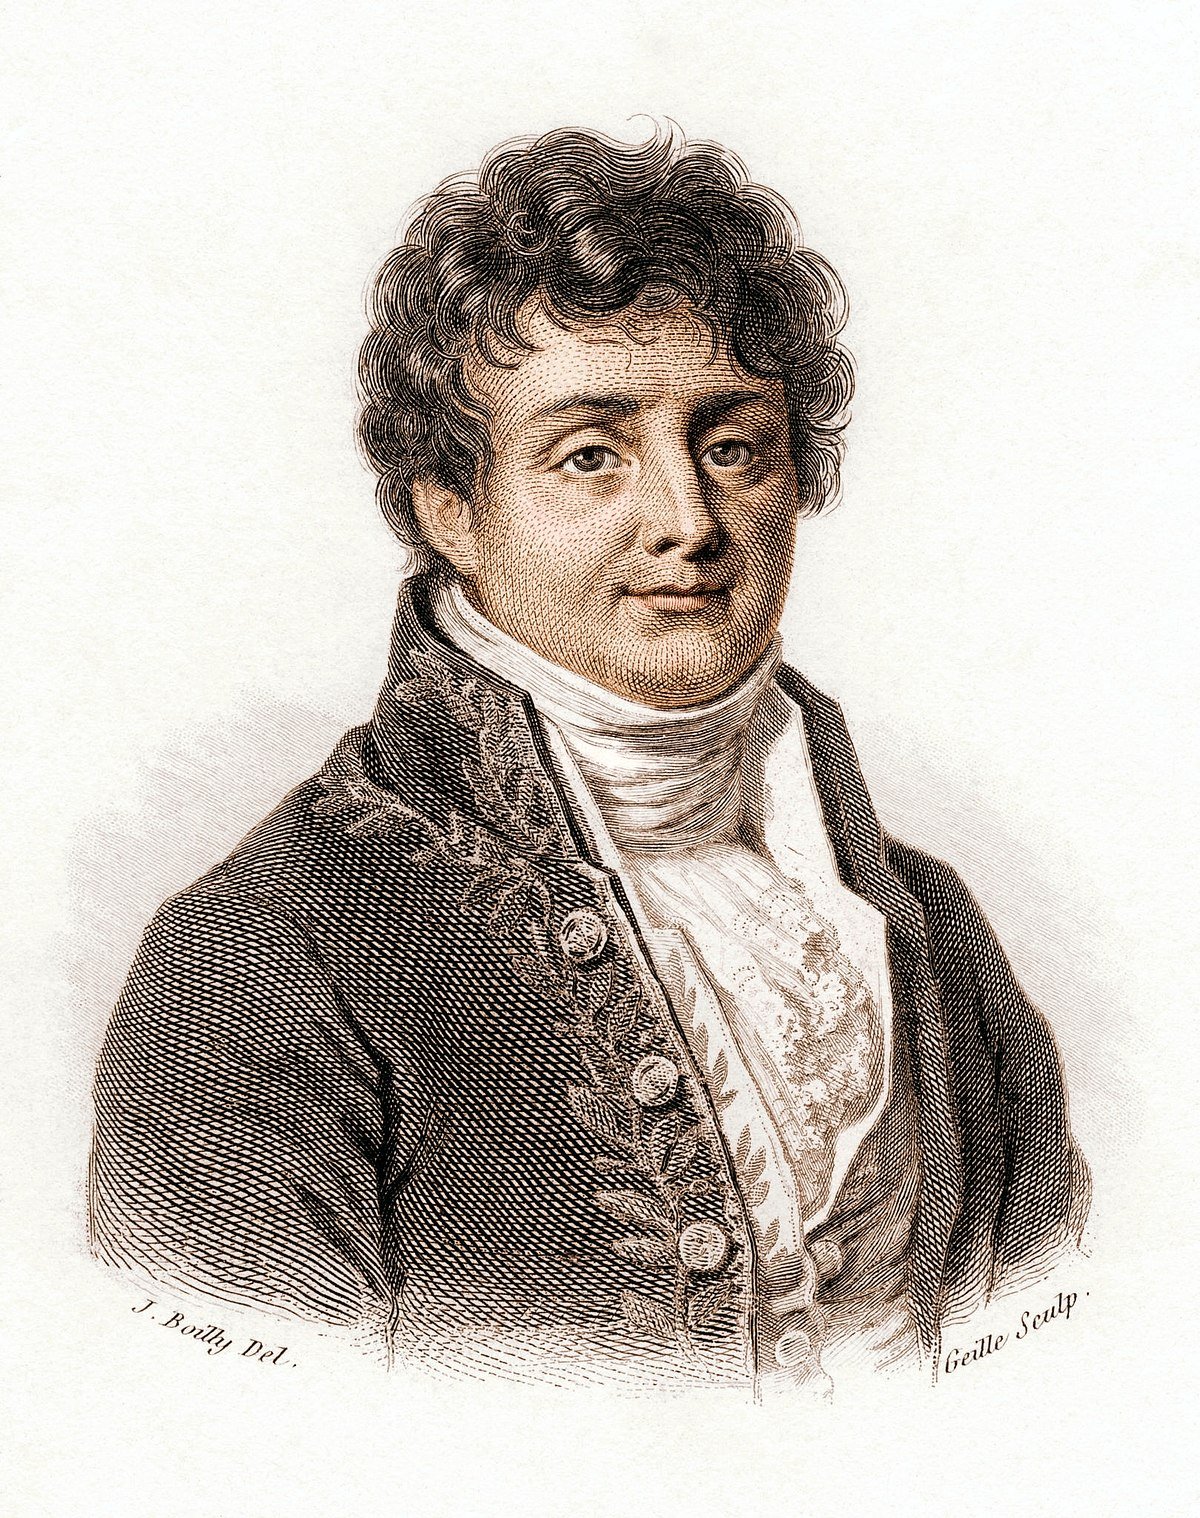 Period portrait of Joseph Fourier